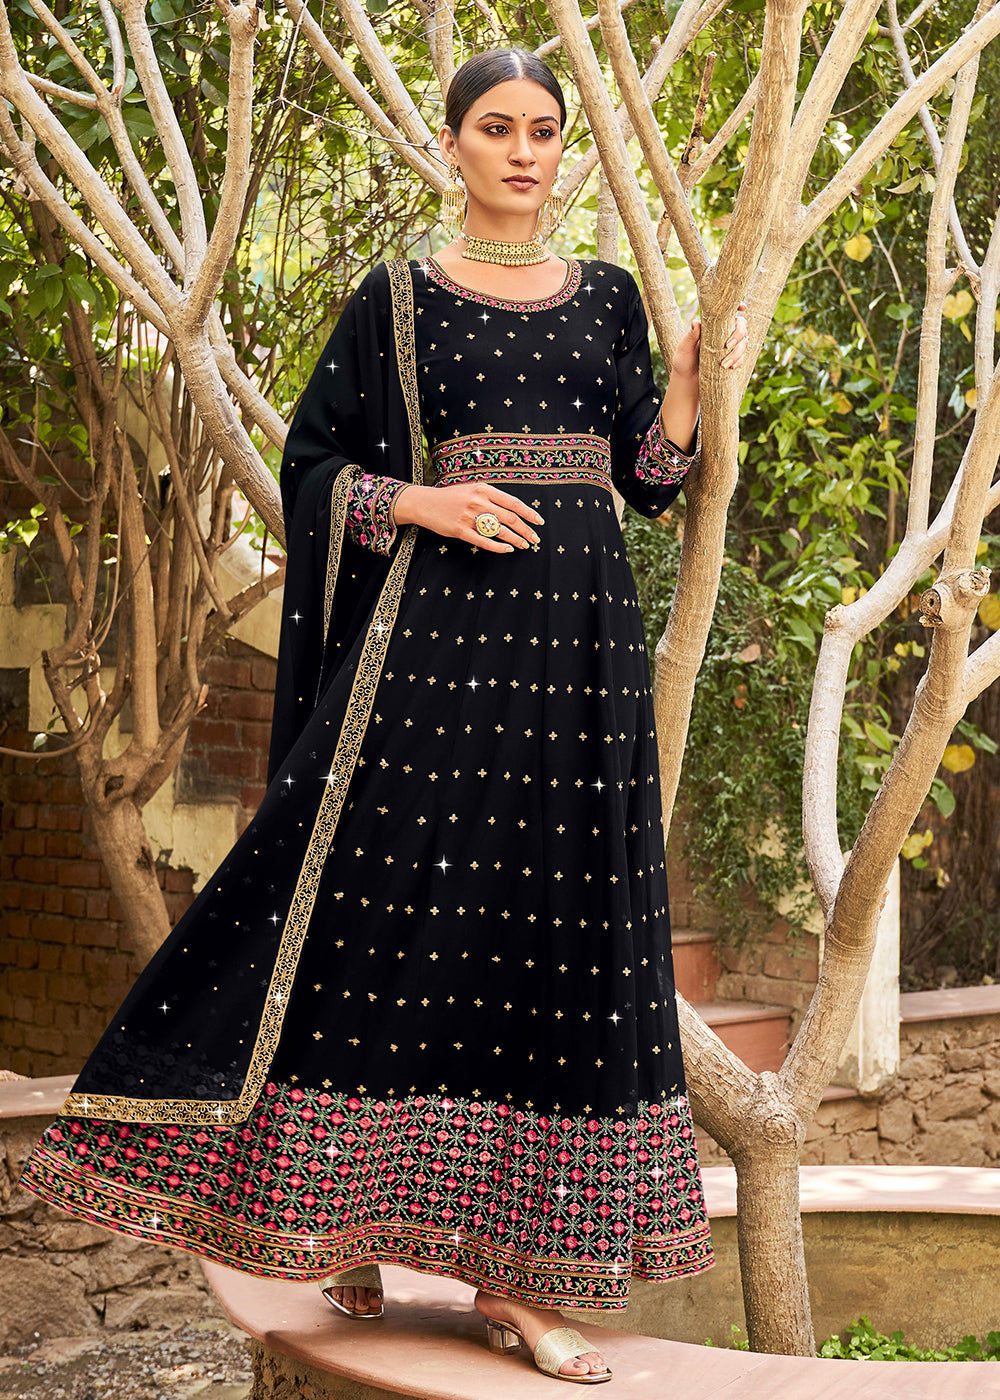 Buy Now Trendy Black Georgette Fabric Wedding Wear Anarkali Suit Online in USA, UK, Australia, New Zealand, Canada & Worldwide at Empress Clothing.